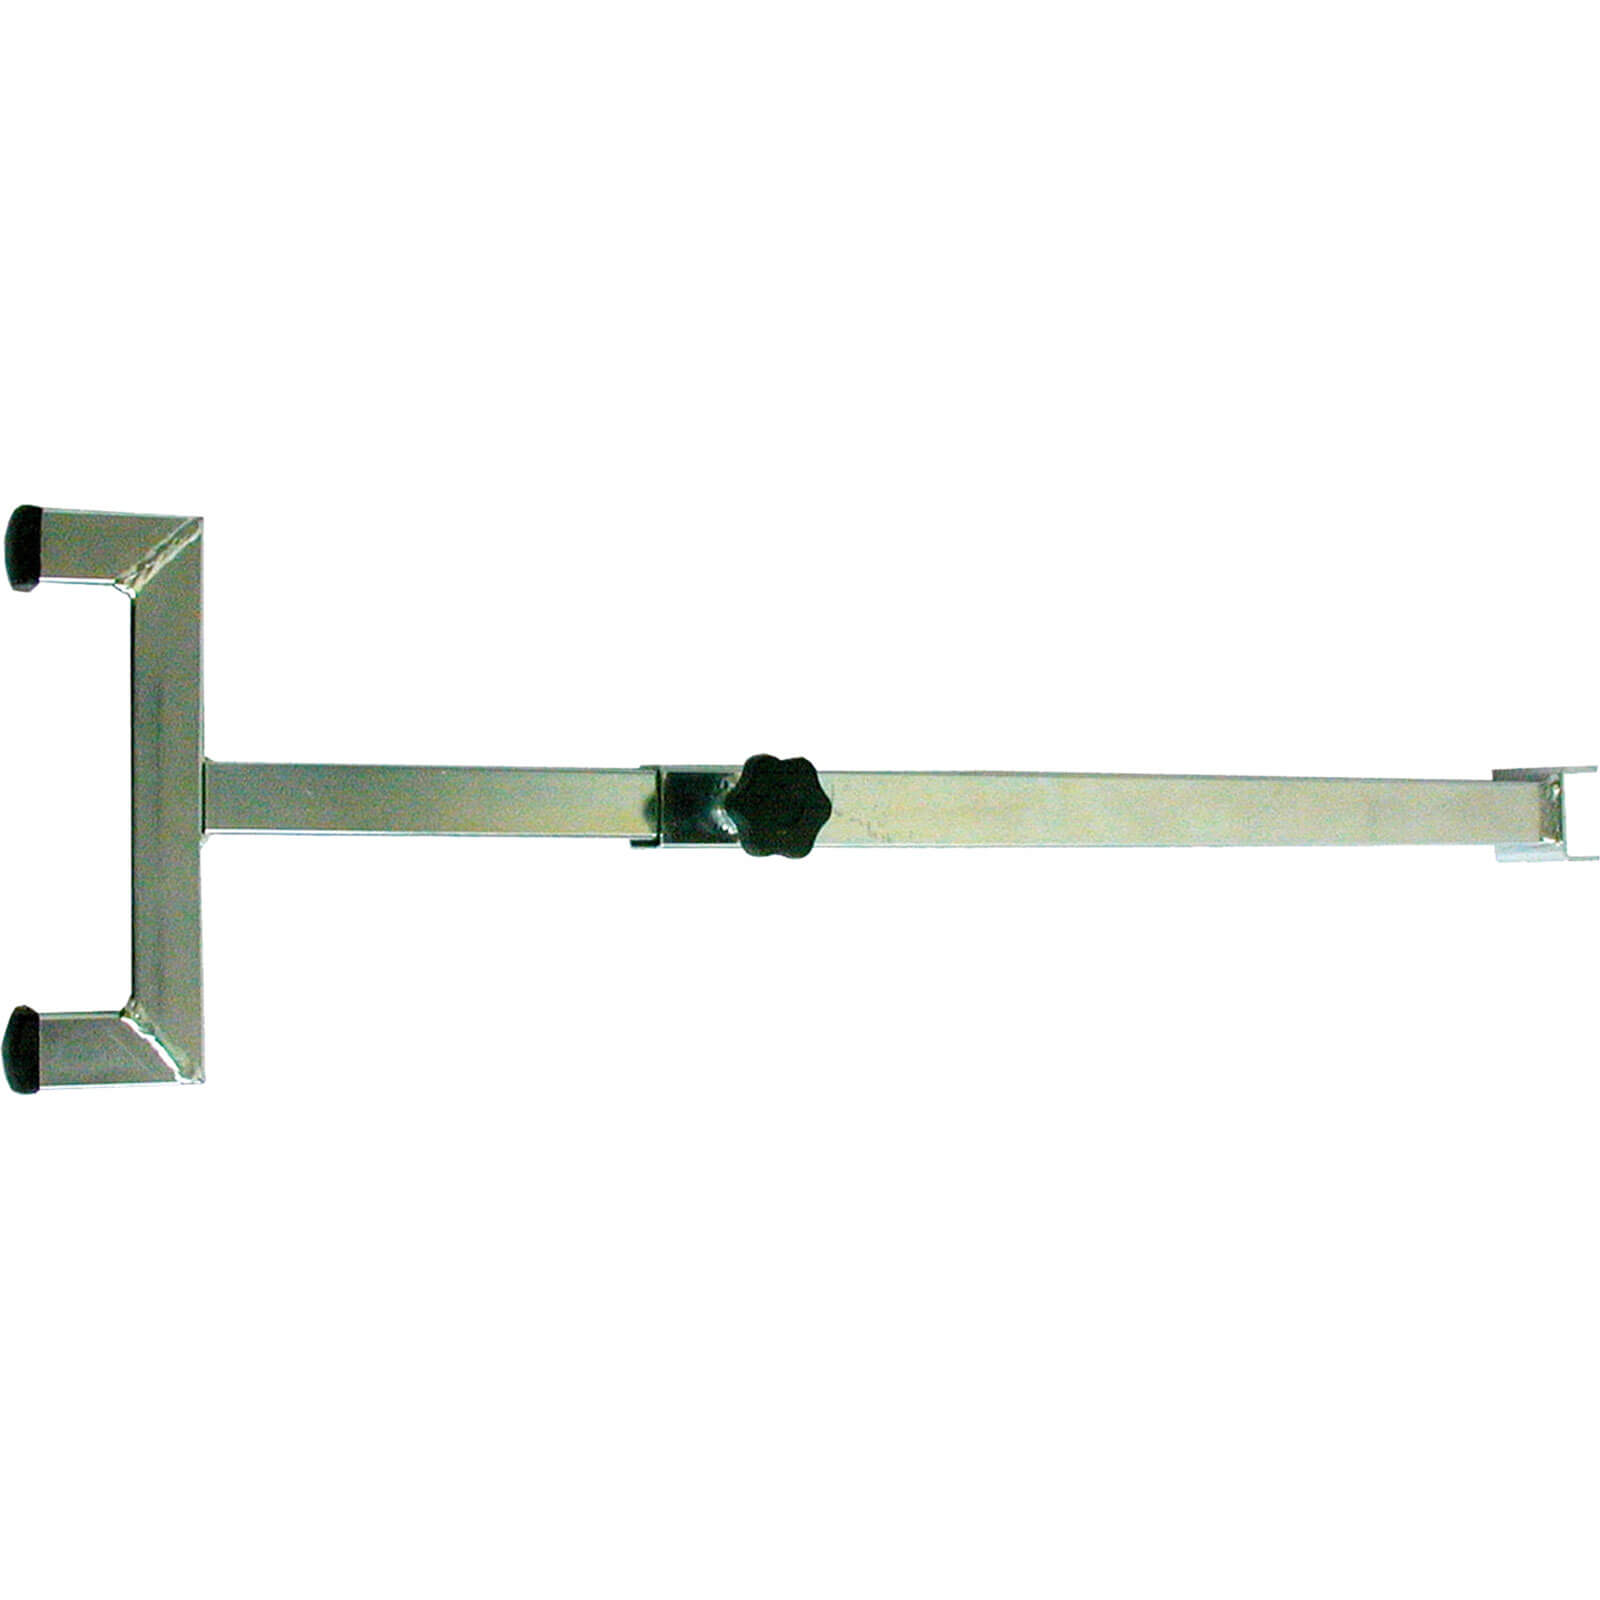 Image of DeWalt DE7028 Extension Support Arm For Universal Mitre Saw Stand